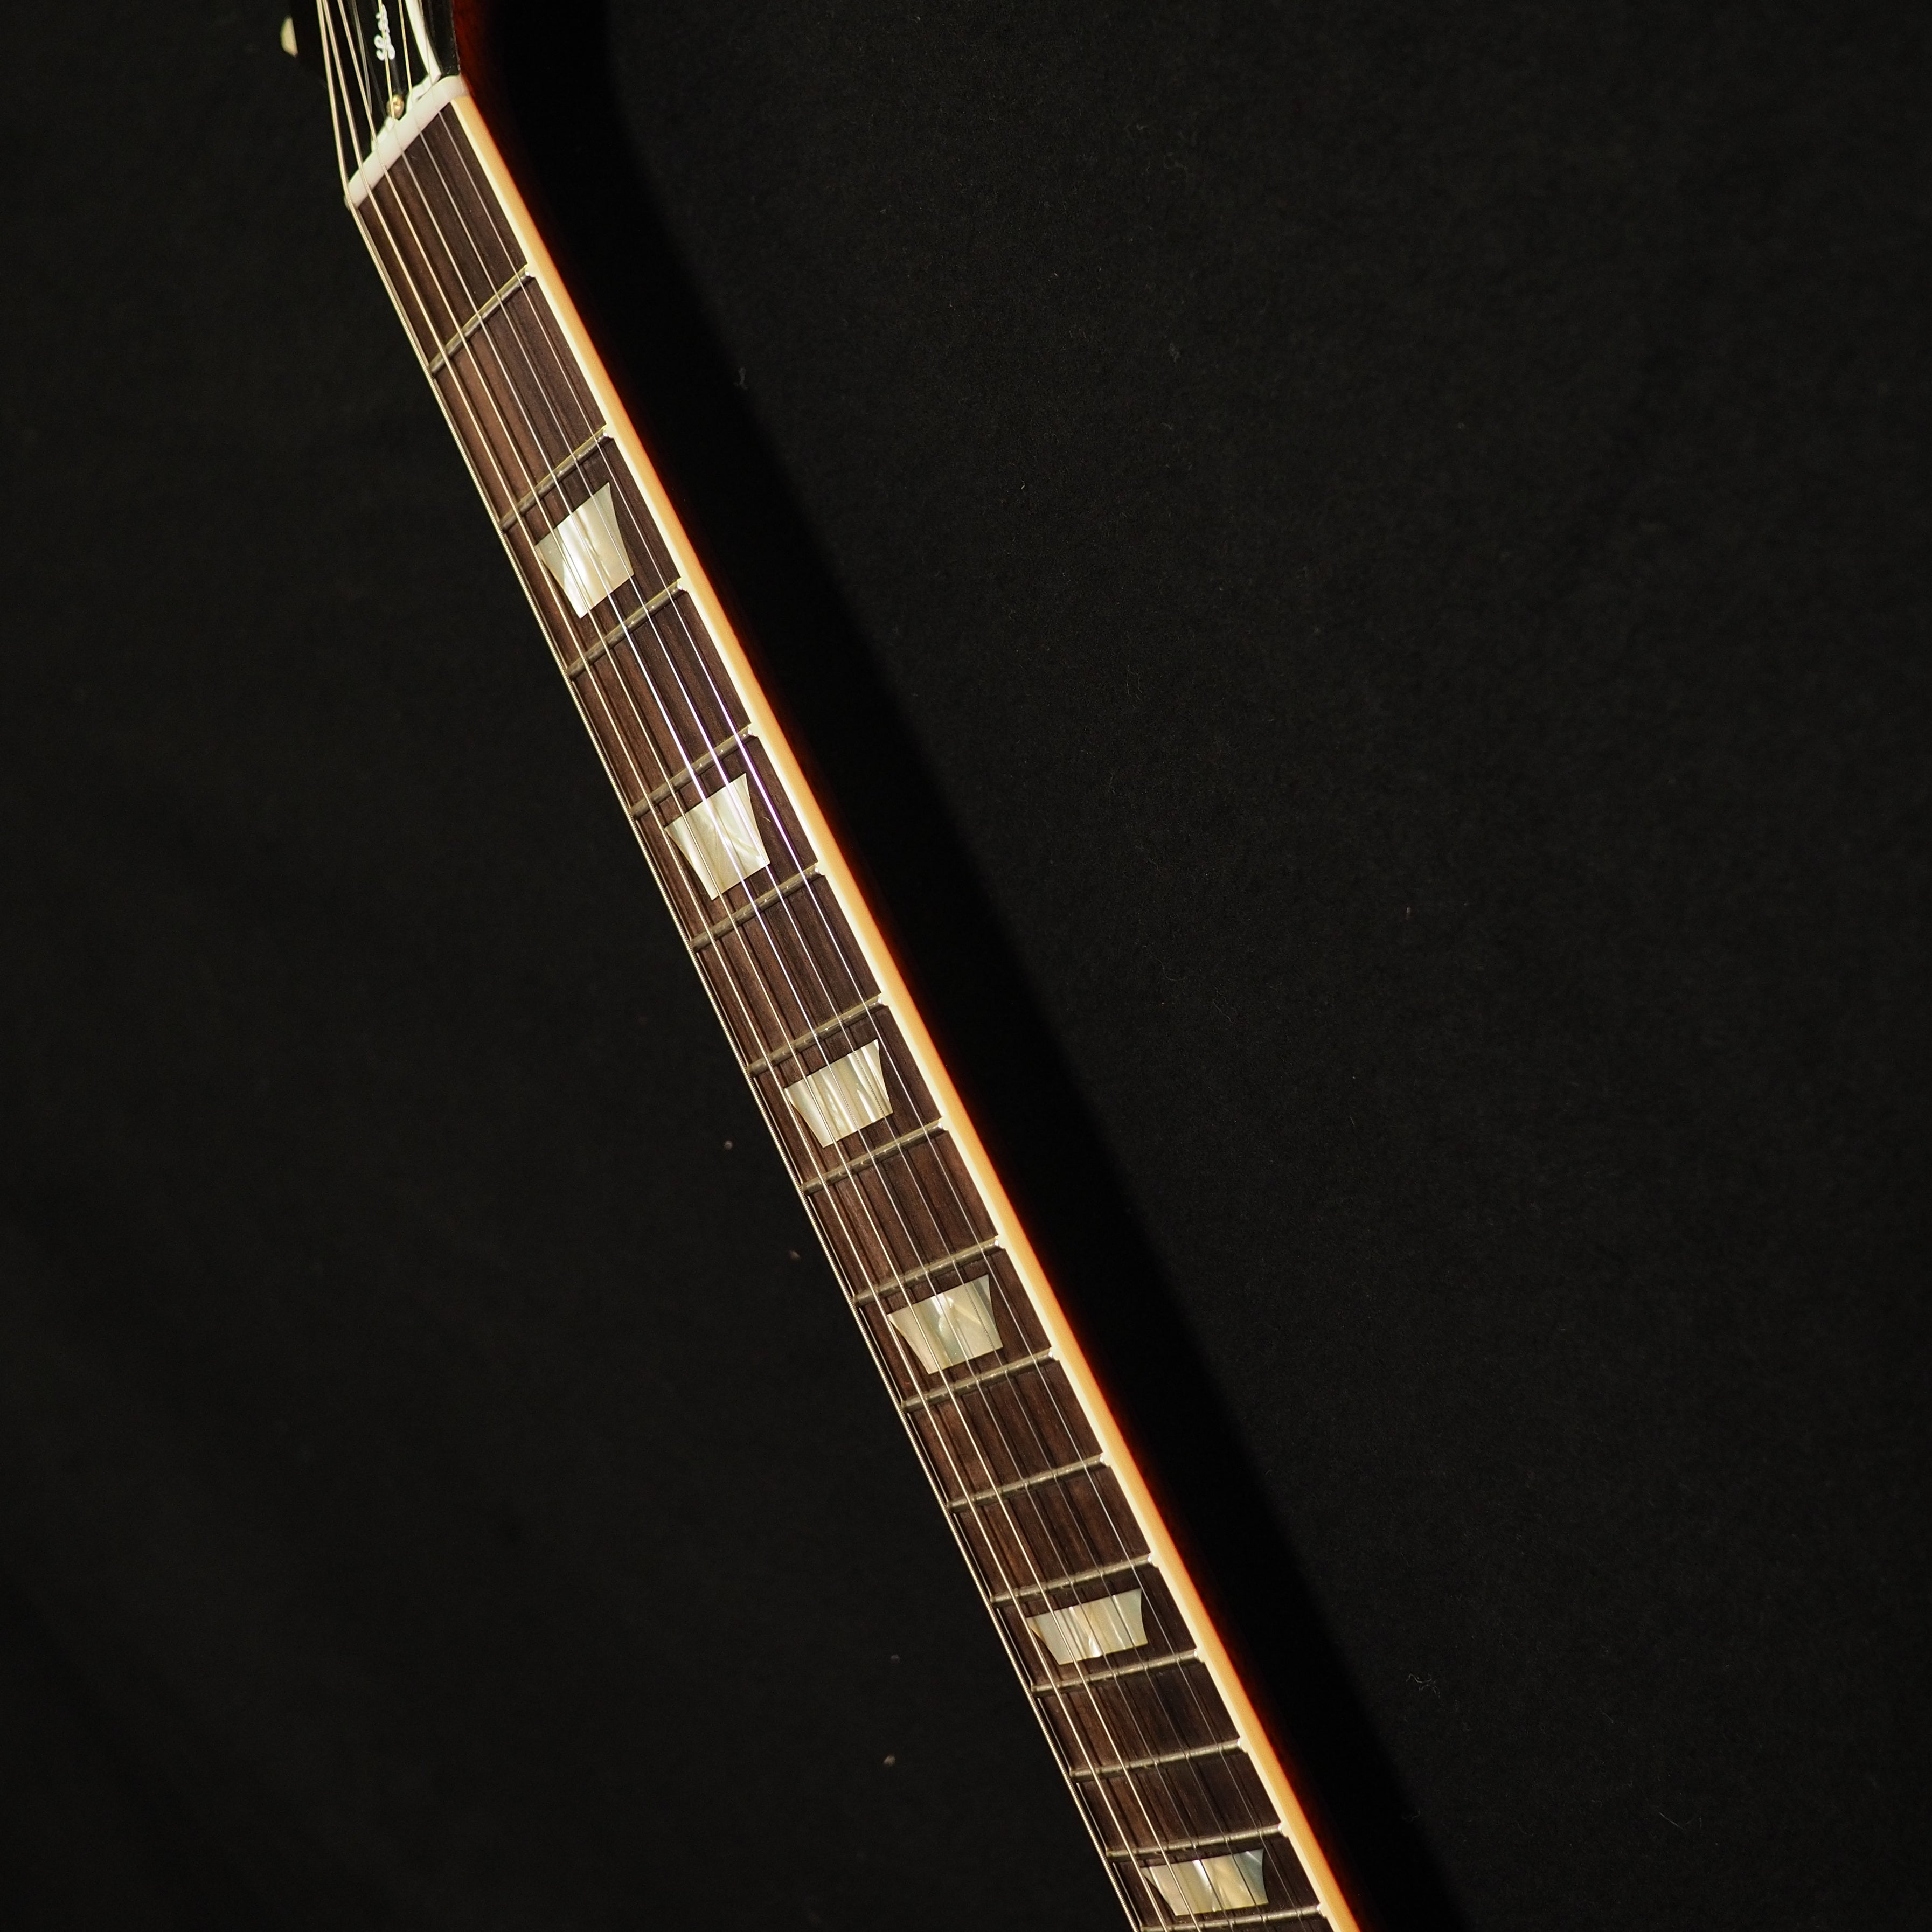 Gibson Custom Shop 60th Anniversary '61 Les Paul SG Standard VOS - New! - wurst.guitars